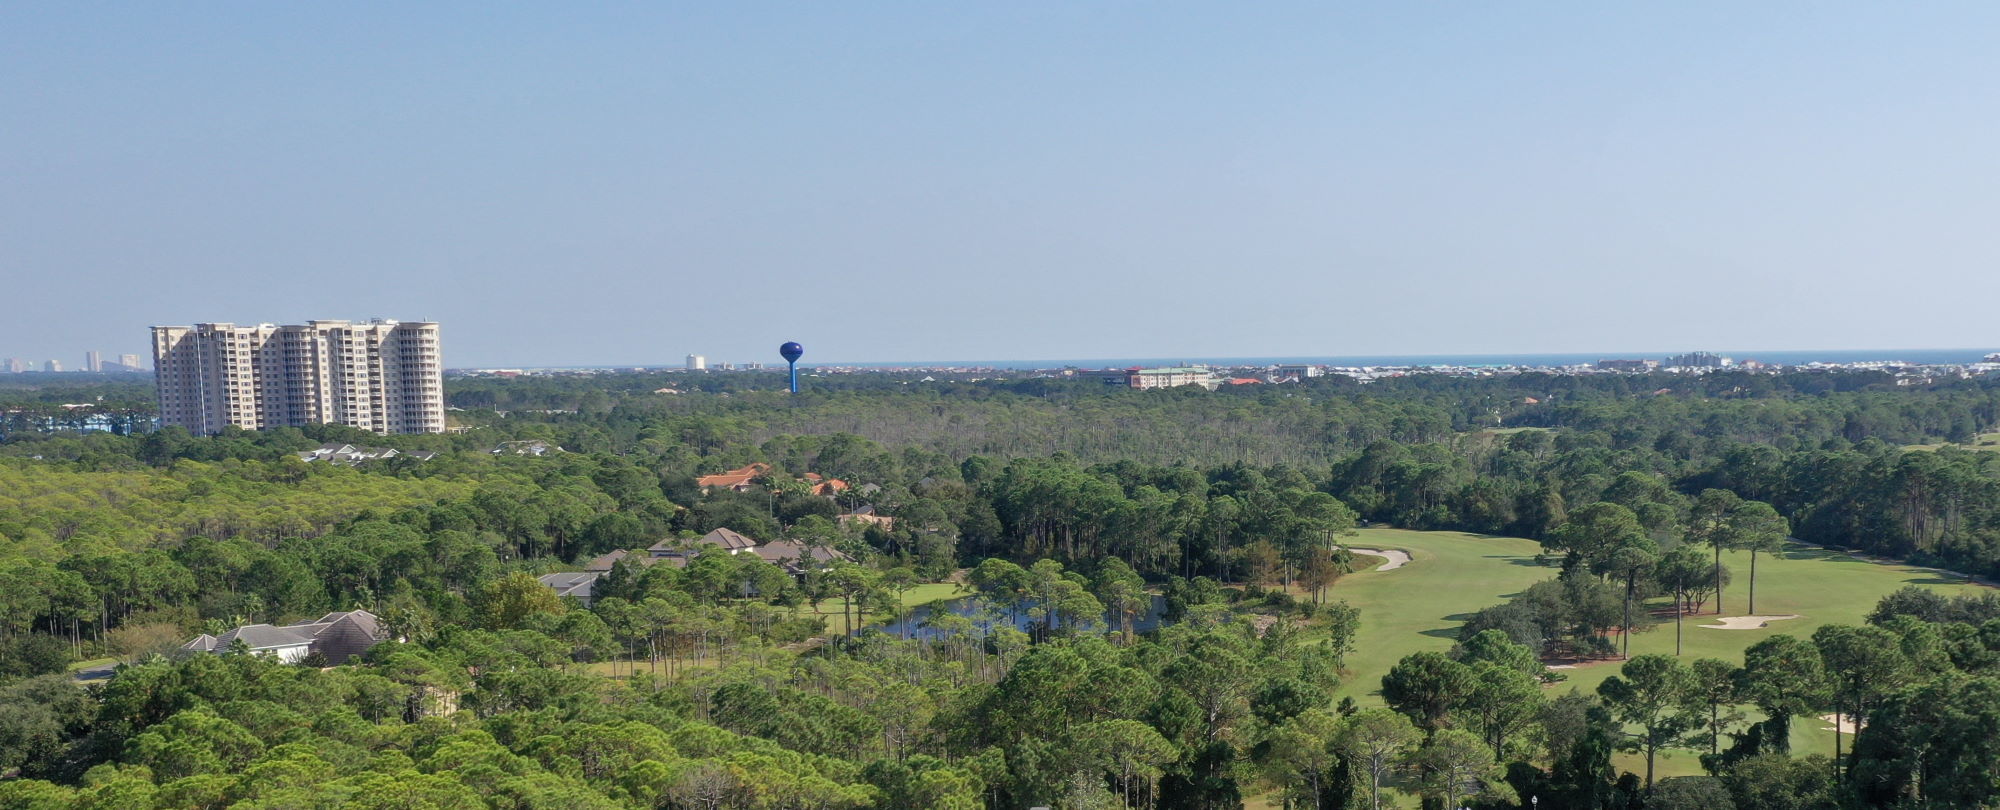 Golf condo living in Kelly Plantation, Destin, Florida